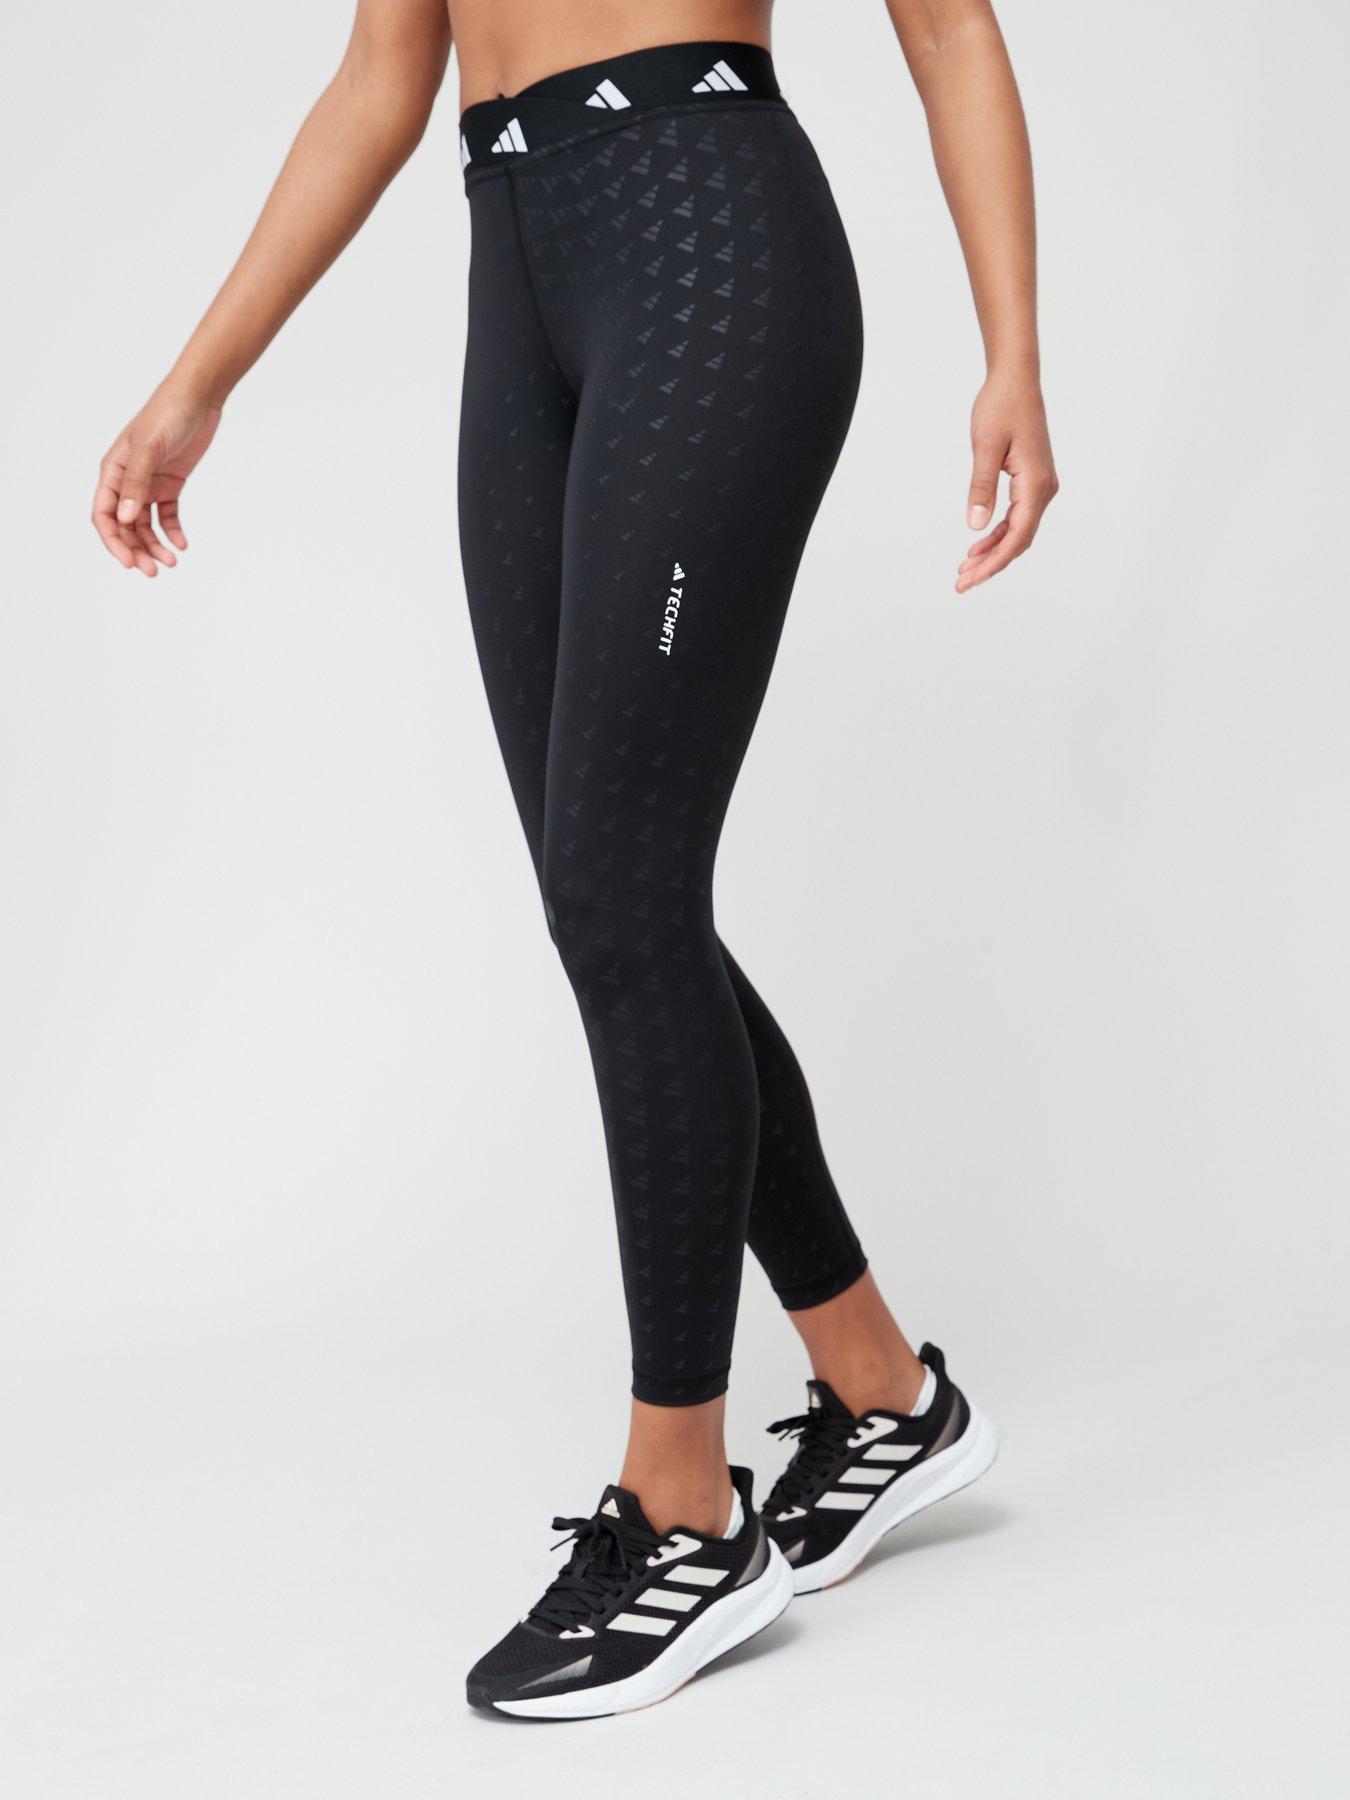 adidas Women's Techfit 3-Stripes Long Gym Leggings, Black, XX-Small :  : Clothing, Shoes & Accessories